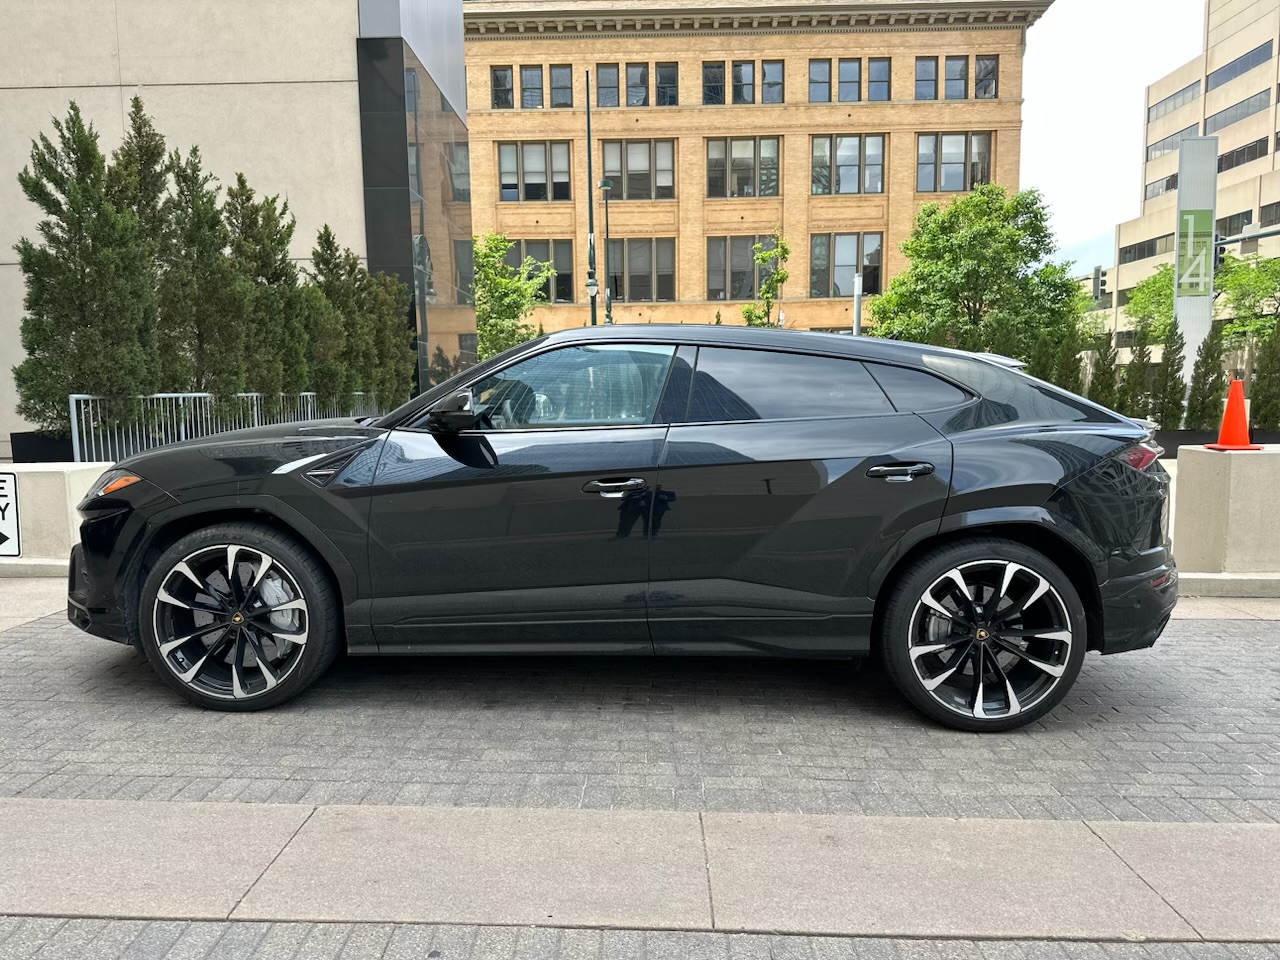 2019 Lamborghini Urus Available at Lamborghini Denver in Colorado